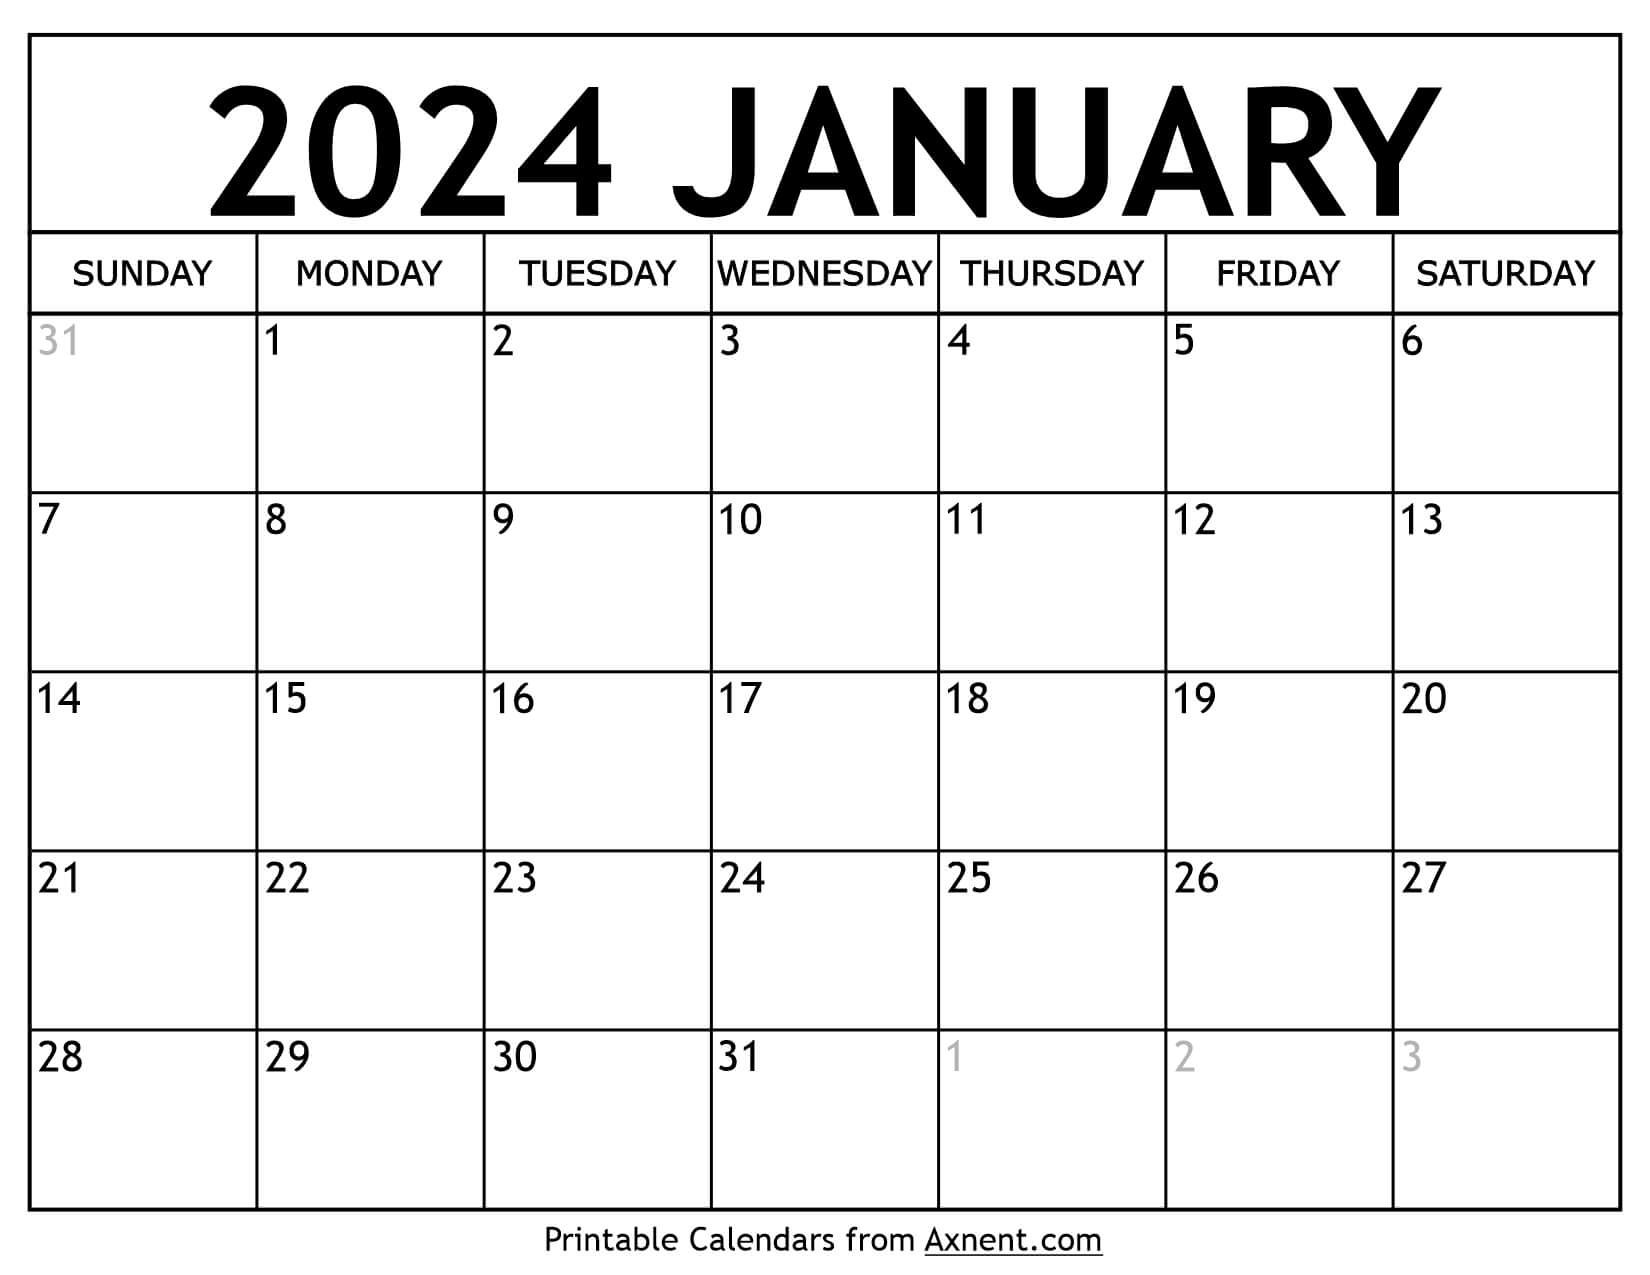 Printable January 2024 Calendar Template - Print Now for January Calendar Free Printable 2024